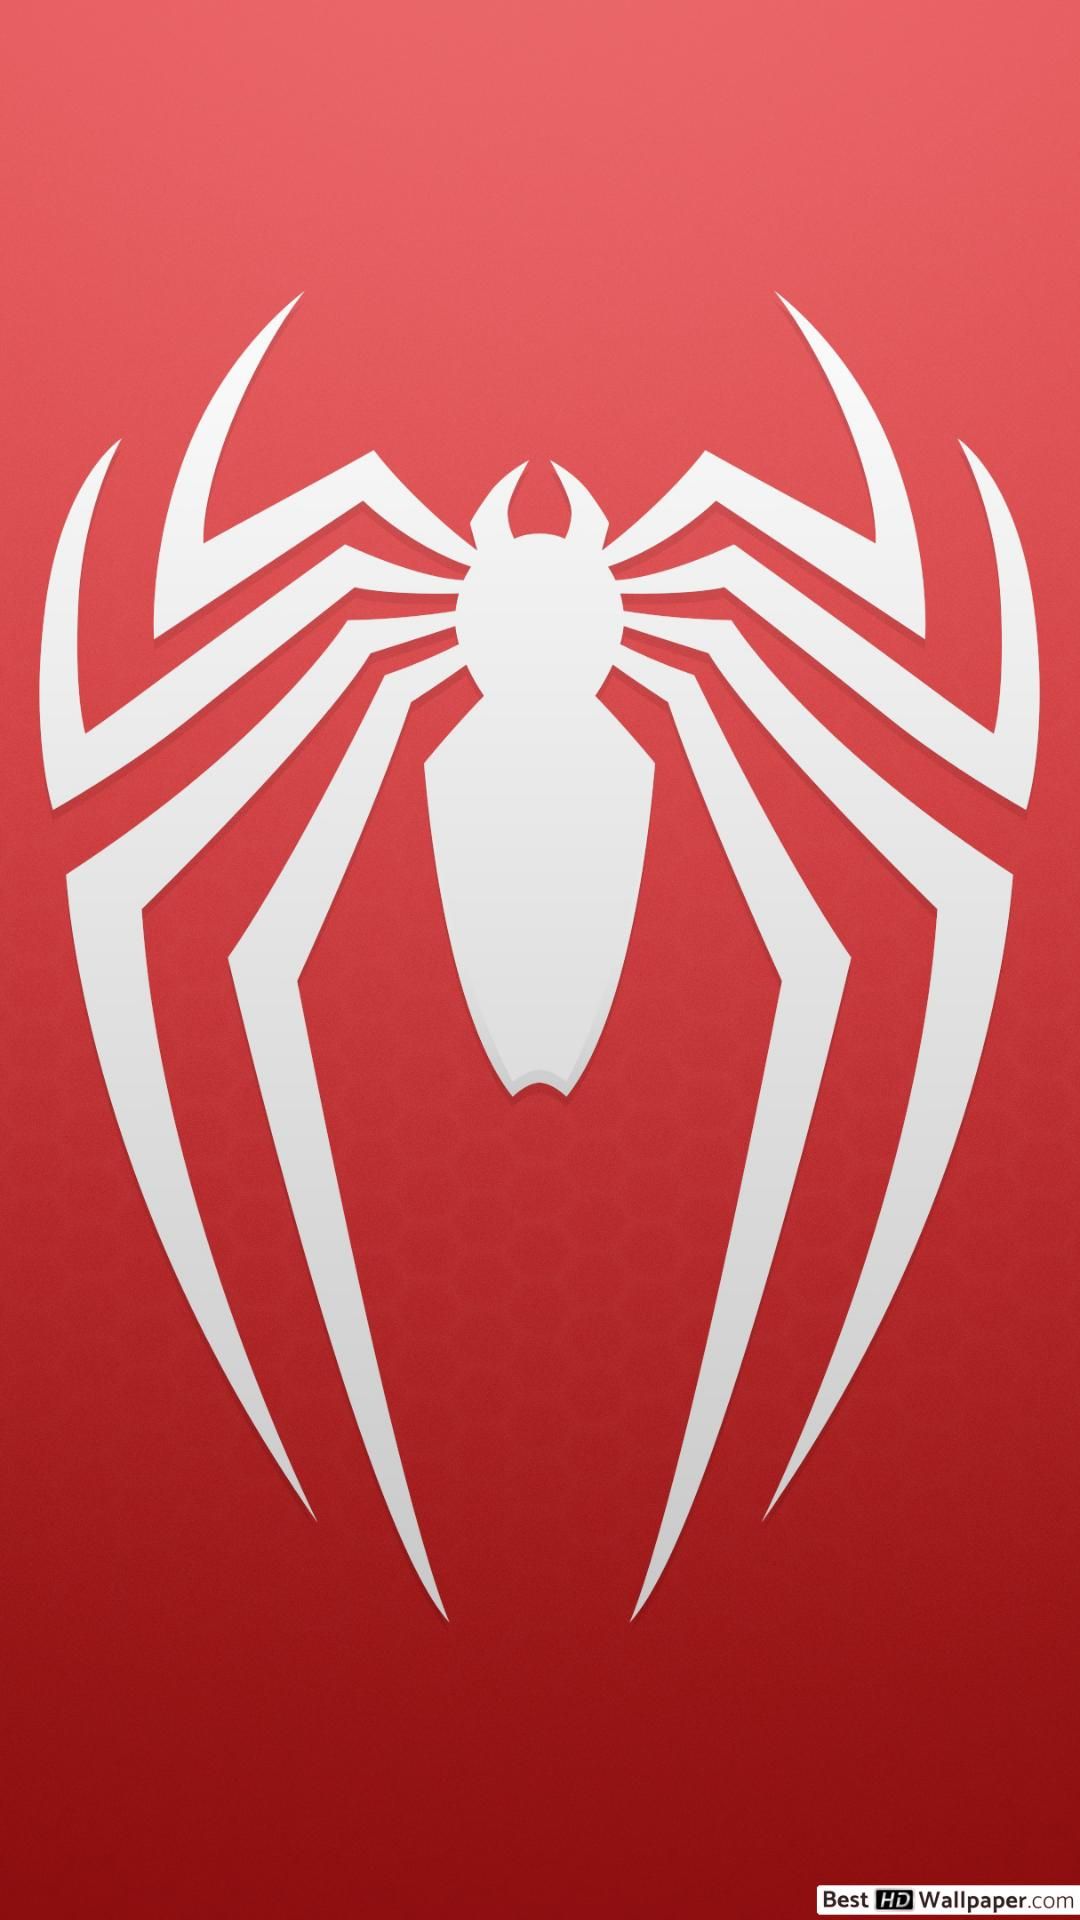 Spider Man Game (2019) HD Wallpaper Download